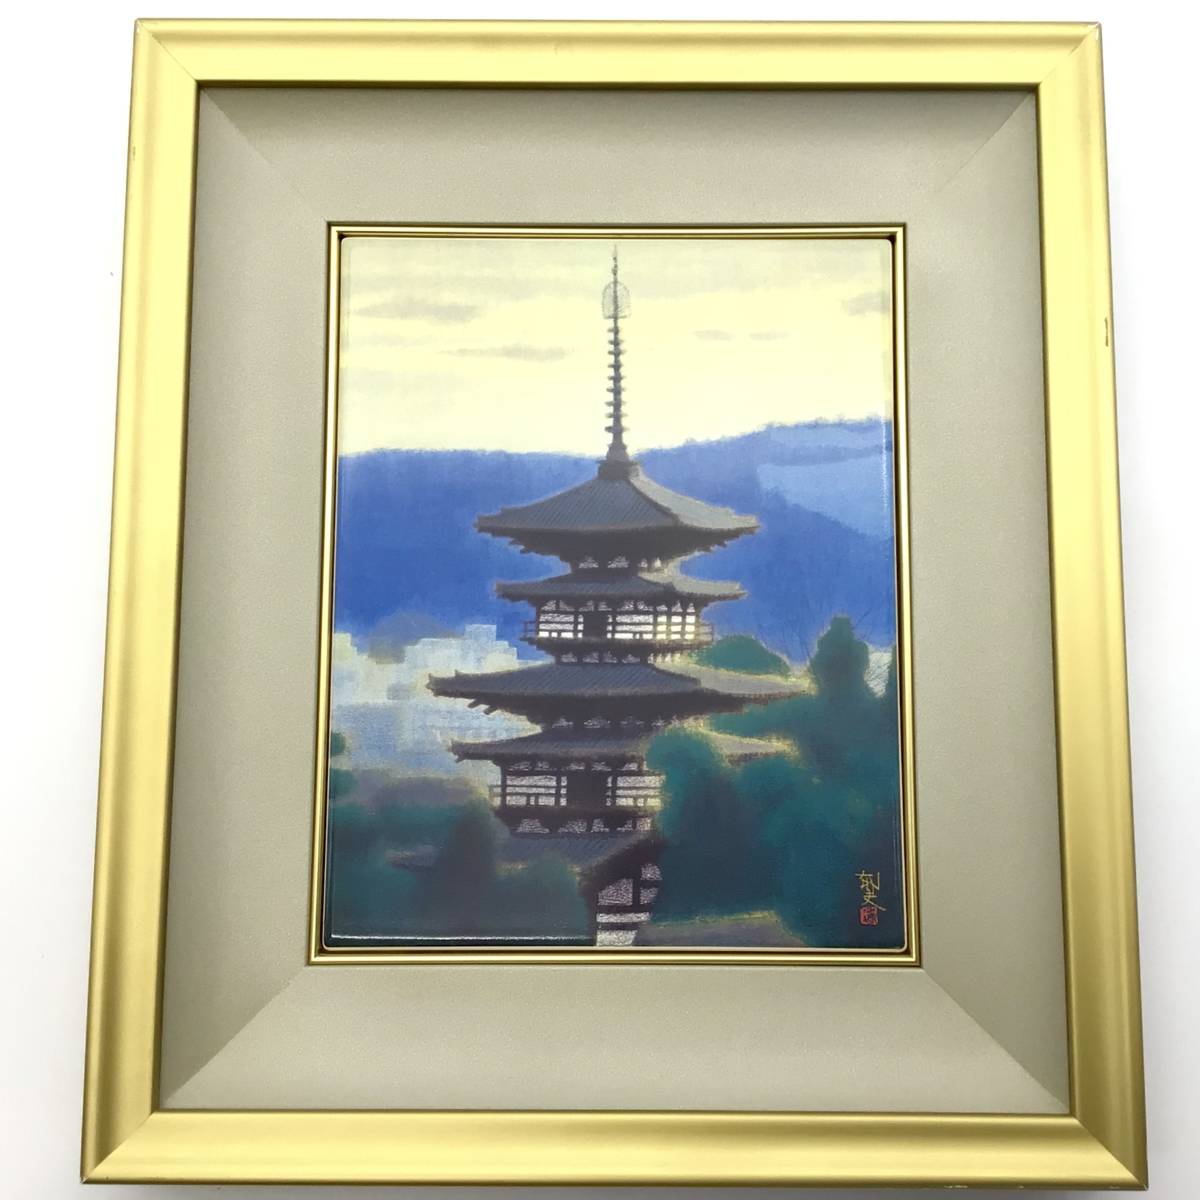 ◆◇Ikuo Hirayama ceramic board painting Yakushiji East Tower framed, Cosmetic box, With certification sticker◇◆, artwork, painting, others